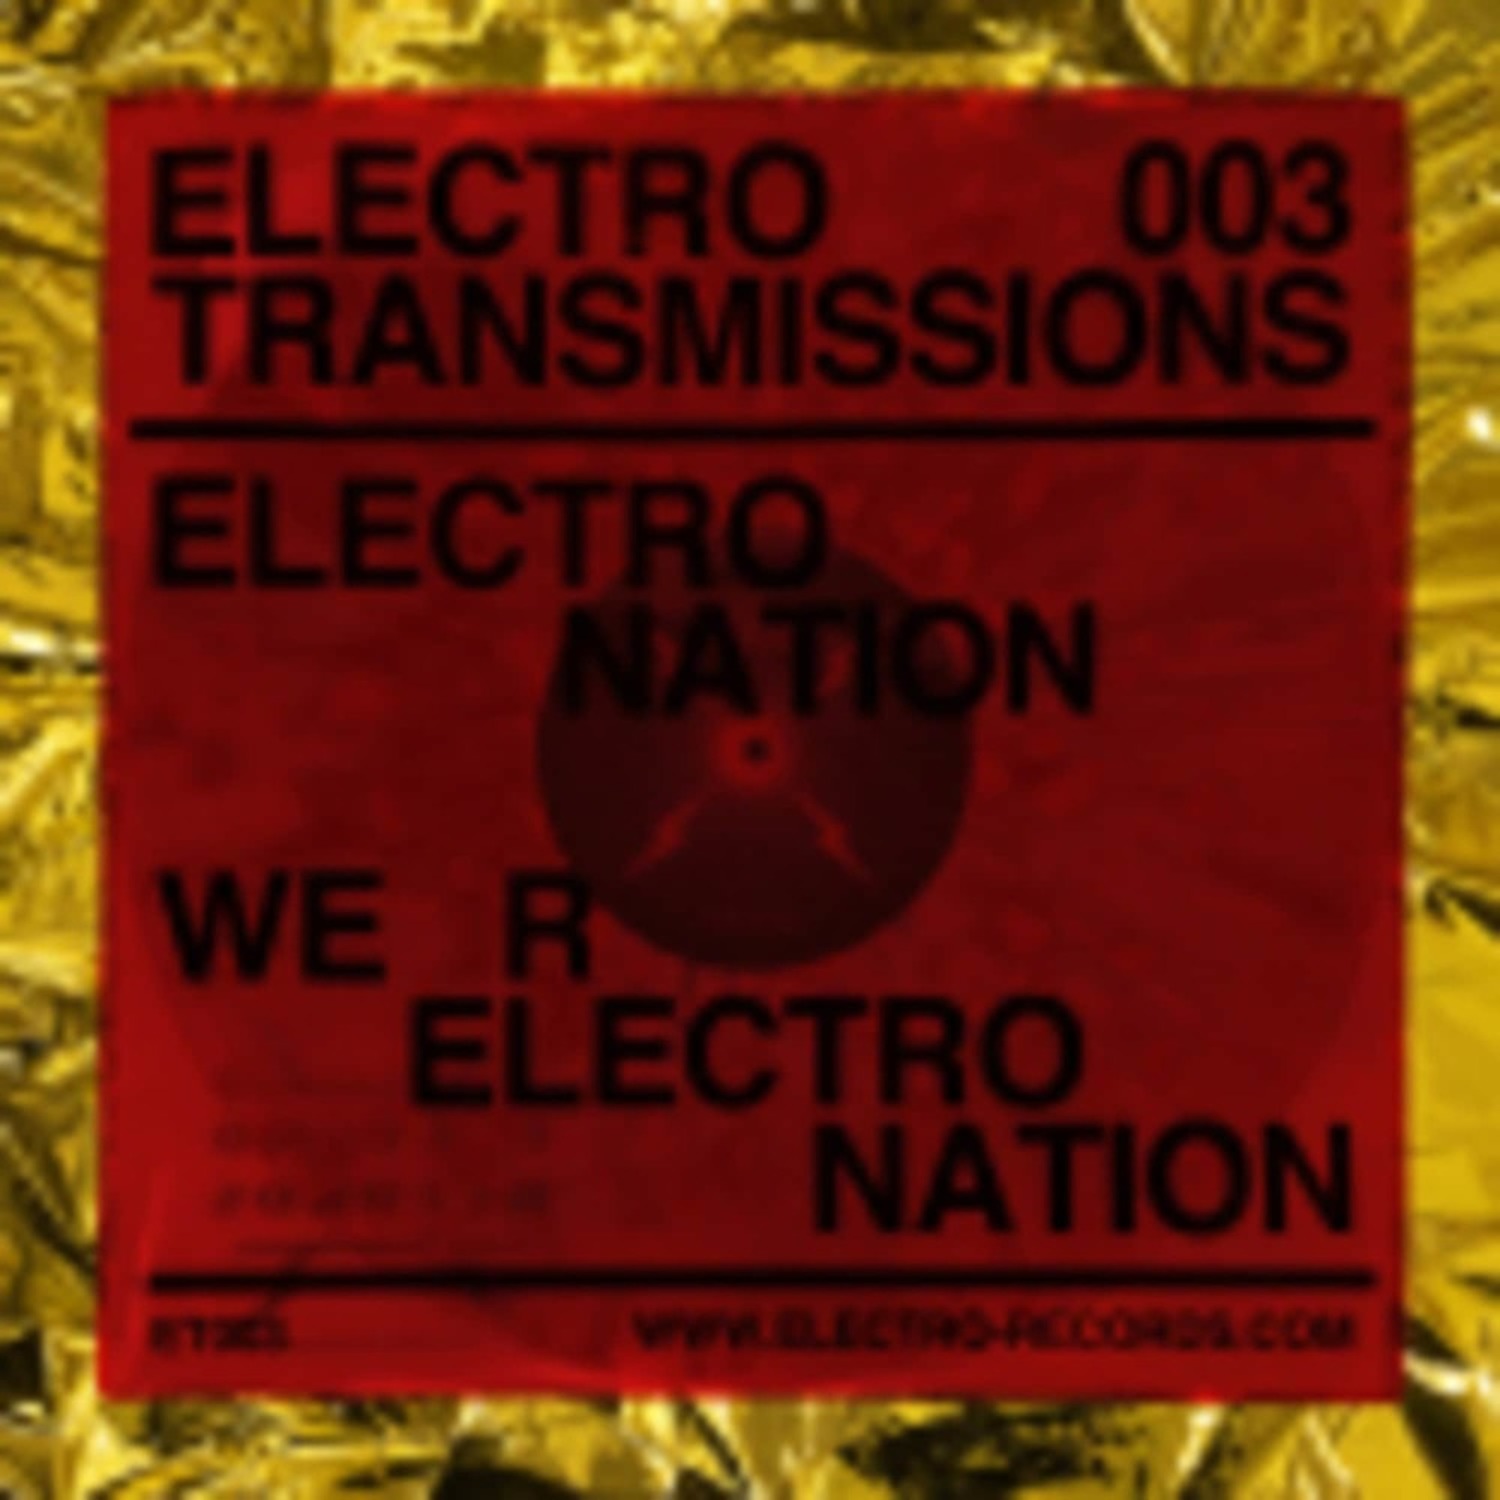 Electro Nation - ELECTRO TRANSMISSIONS 003 WE R ELECTRO NATION EP 